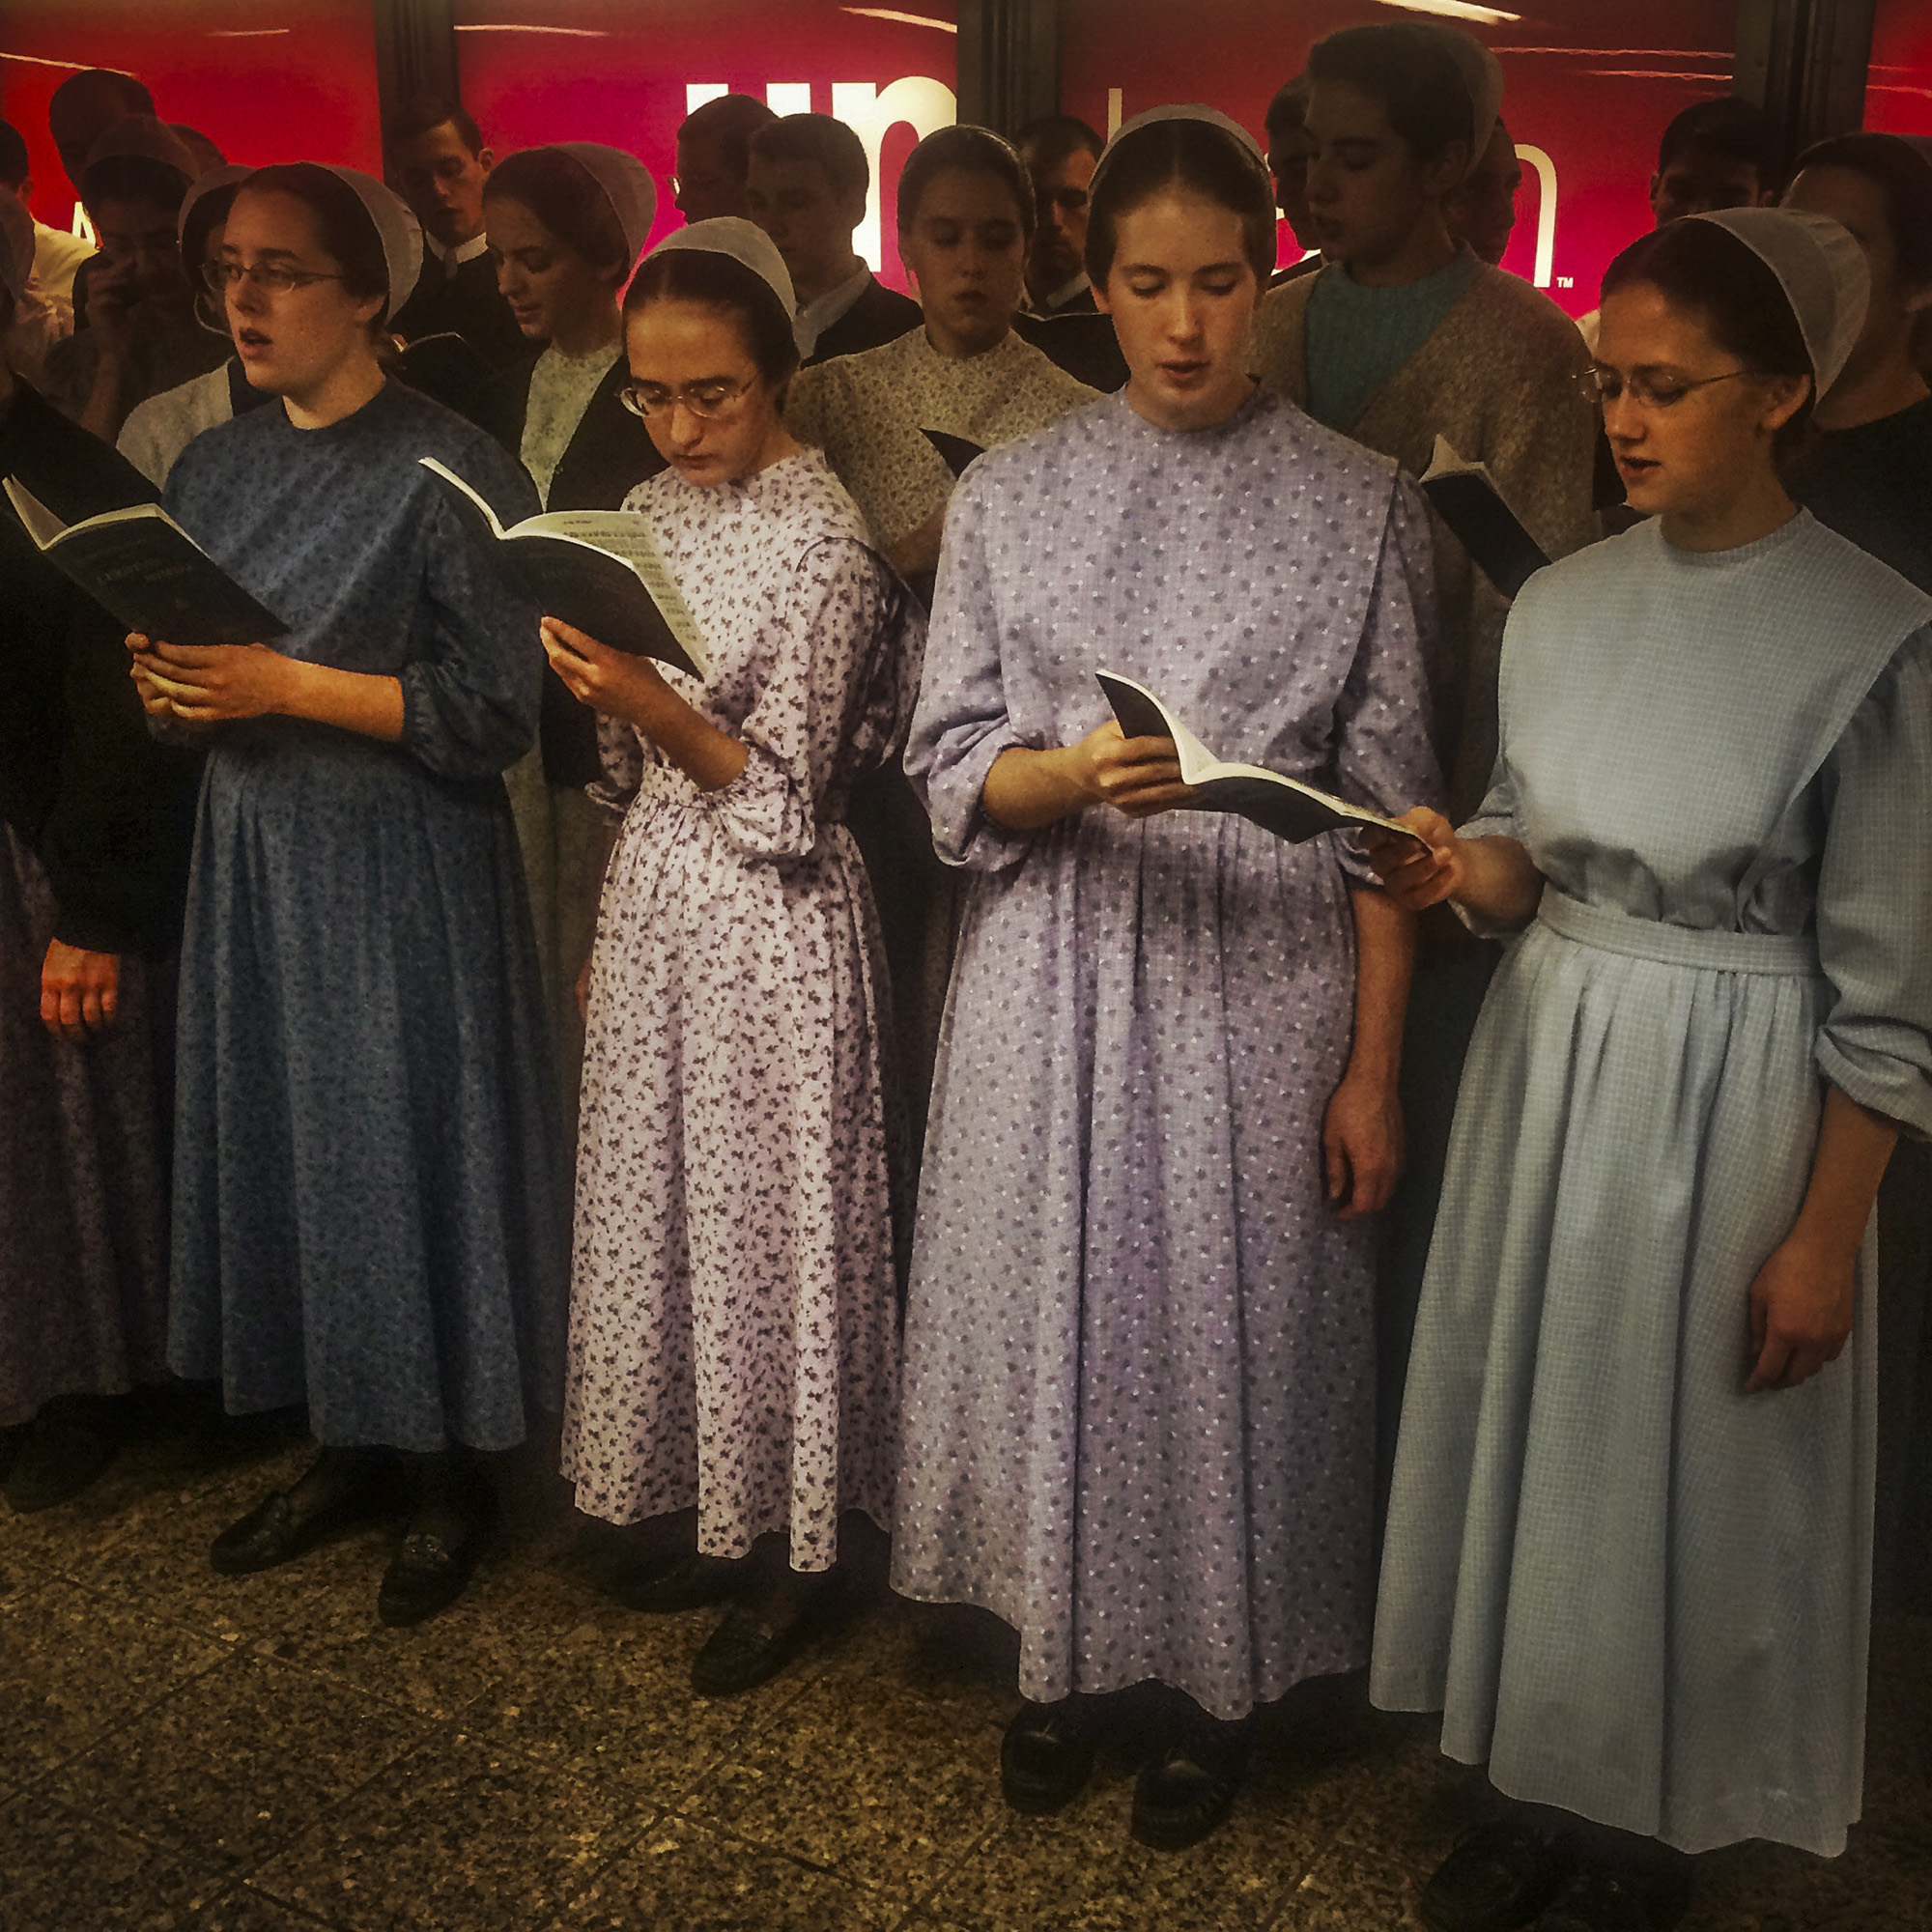 Mennonite Choir, 42nd Street Subway Station, 2016